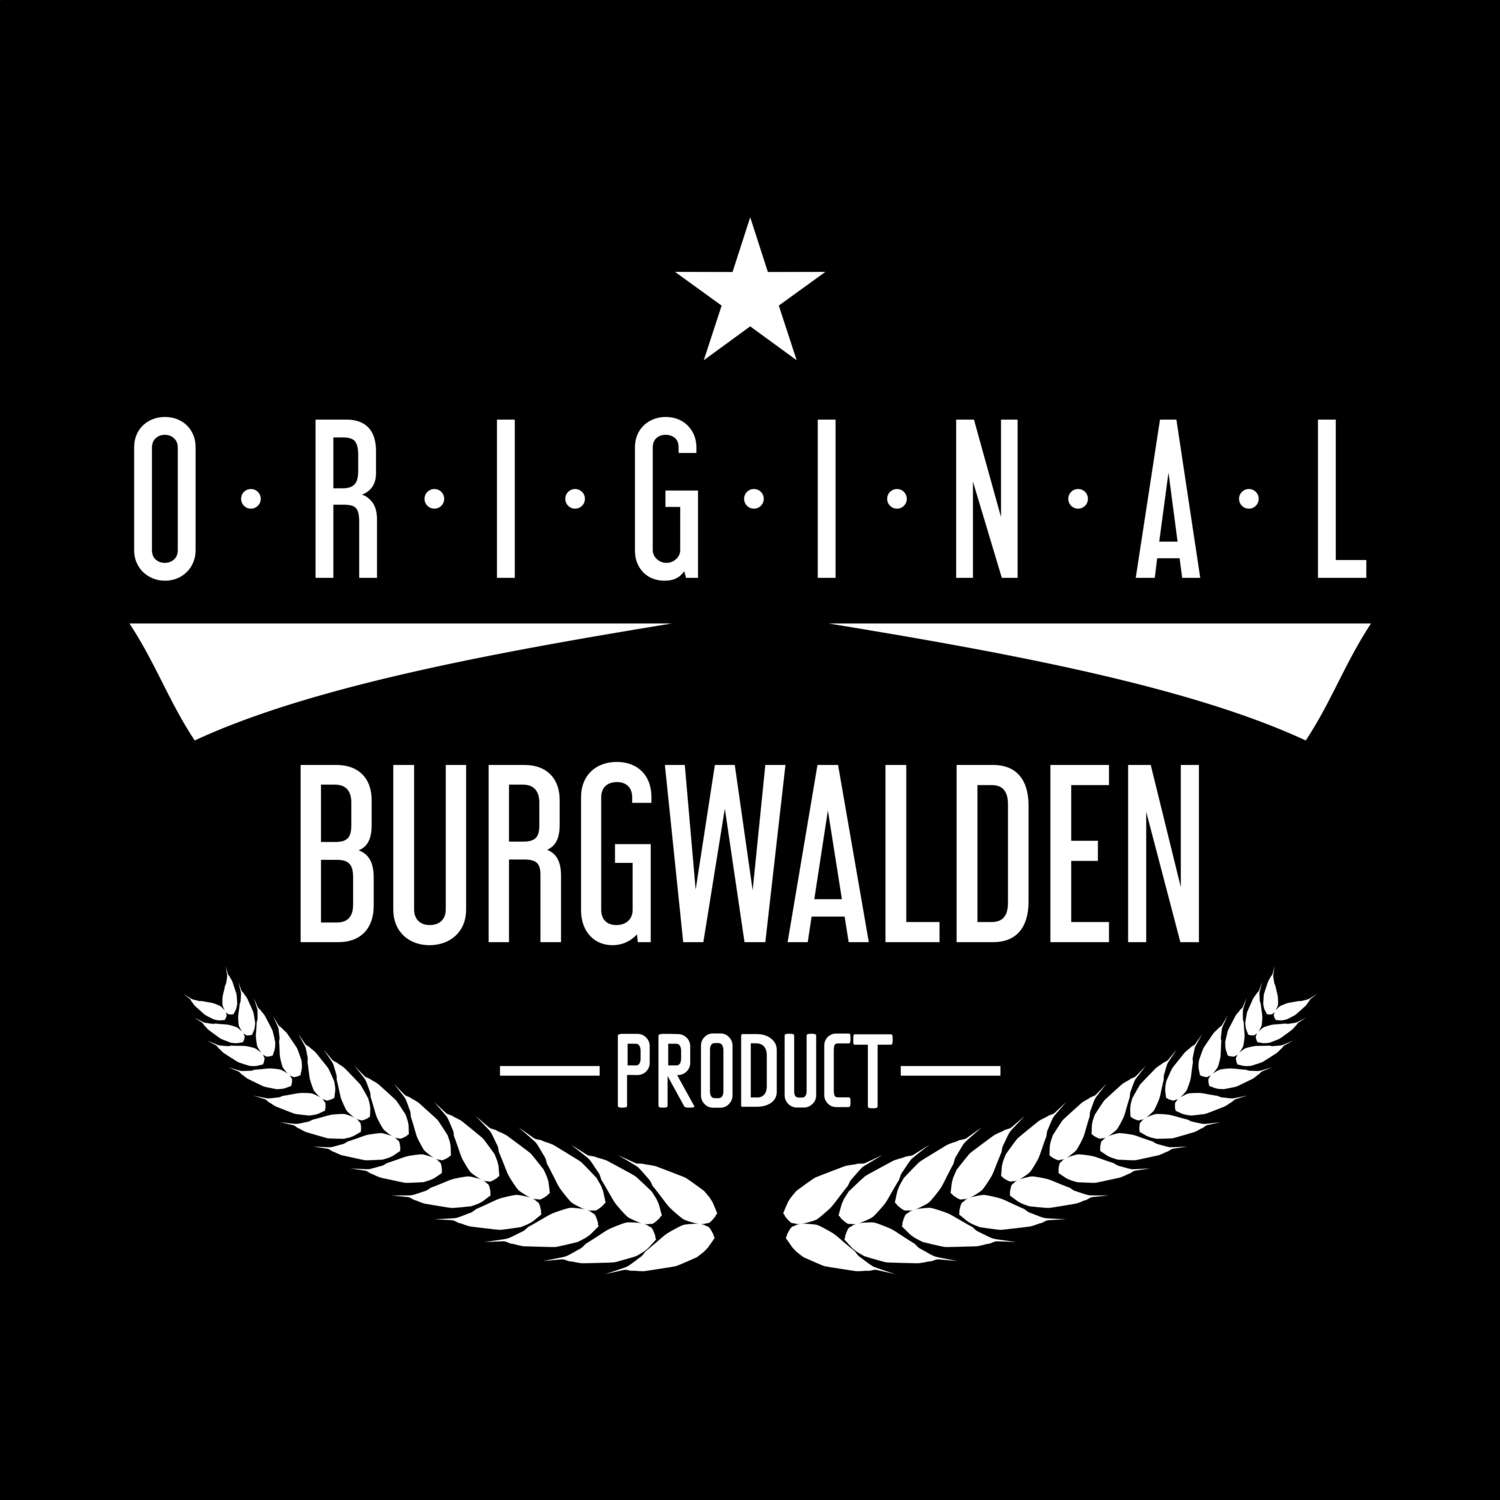 Burgwalden T-Shirt »Original Product«